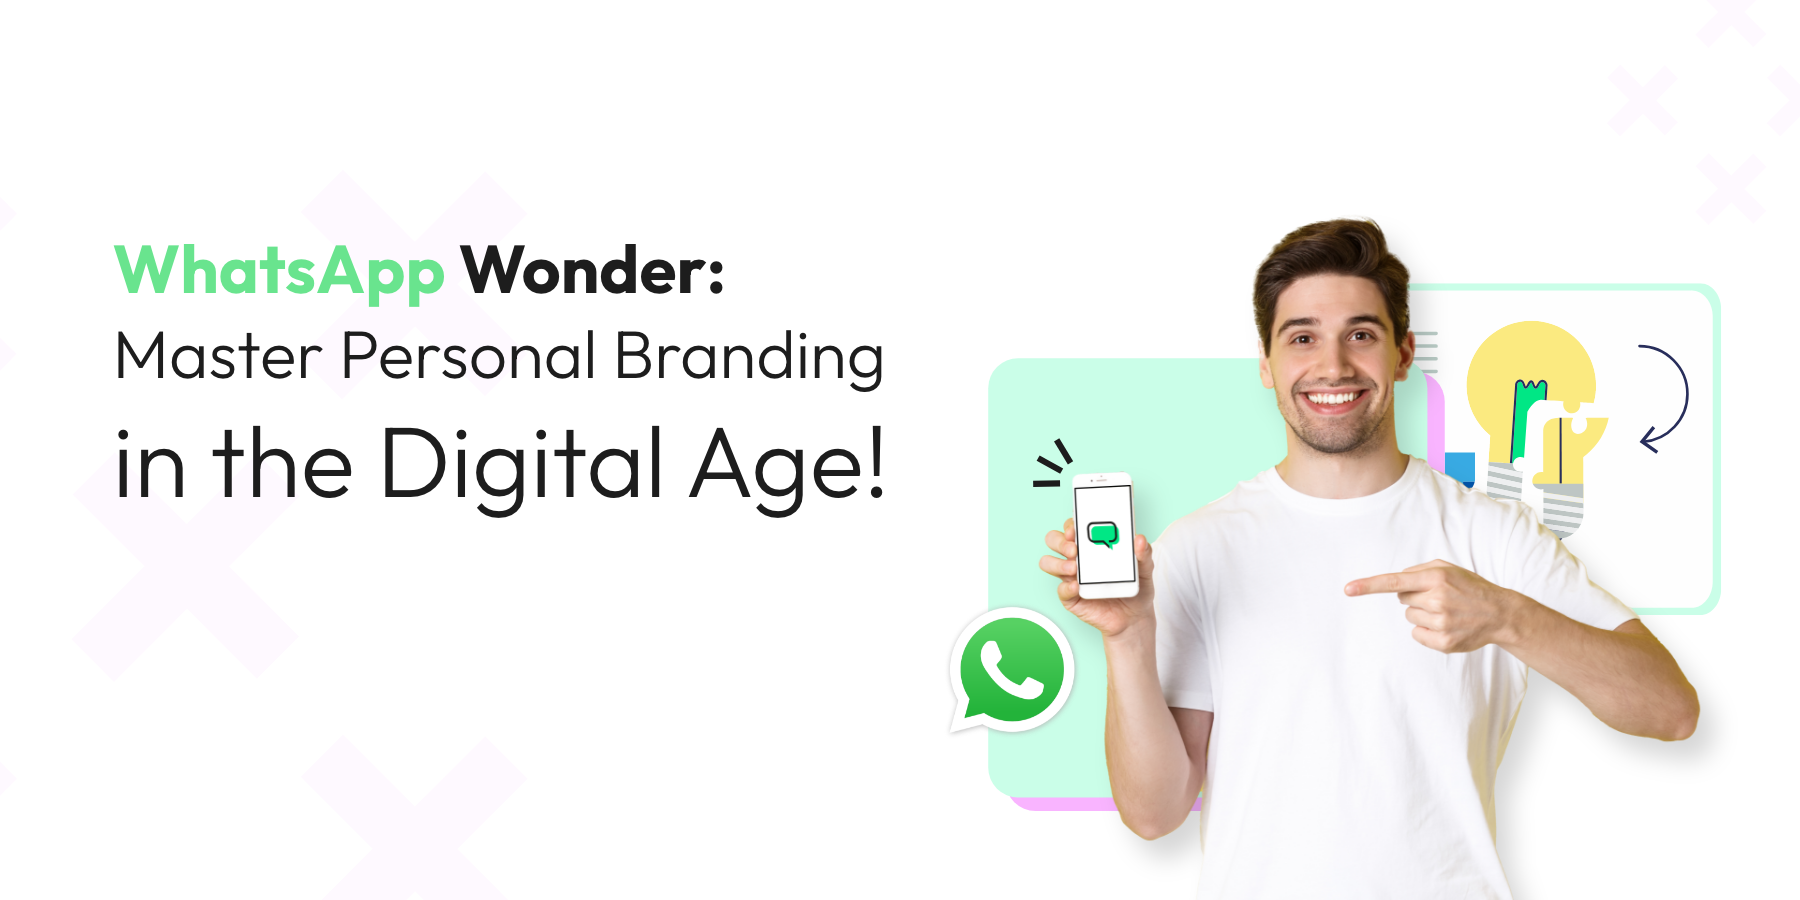 WhatsApp Wonder: Master Personal Branding in the Digital Age